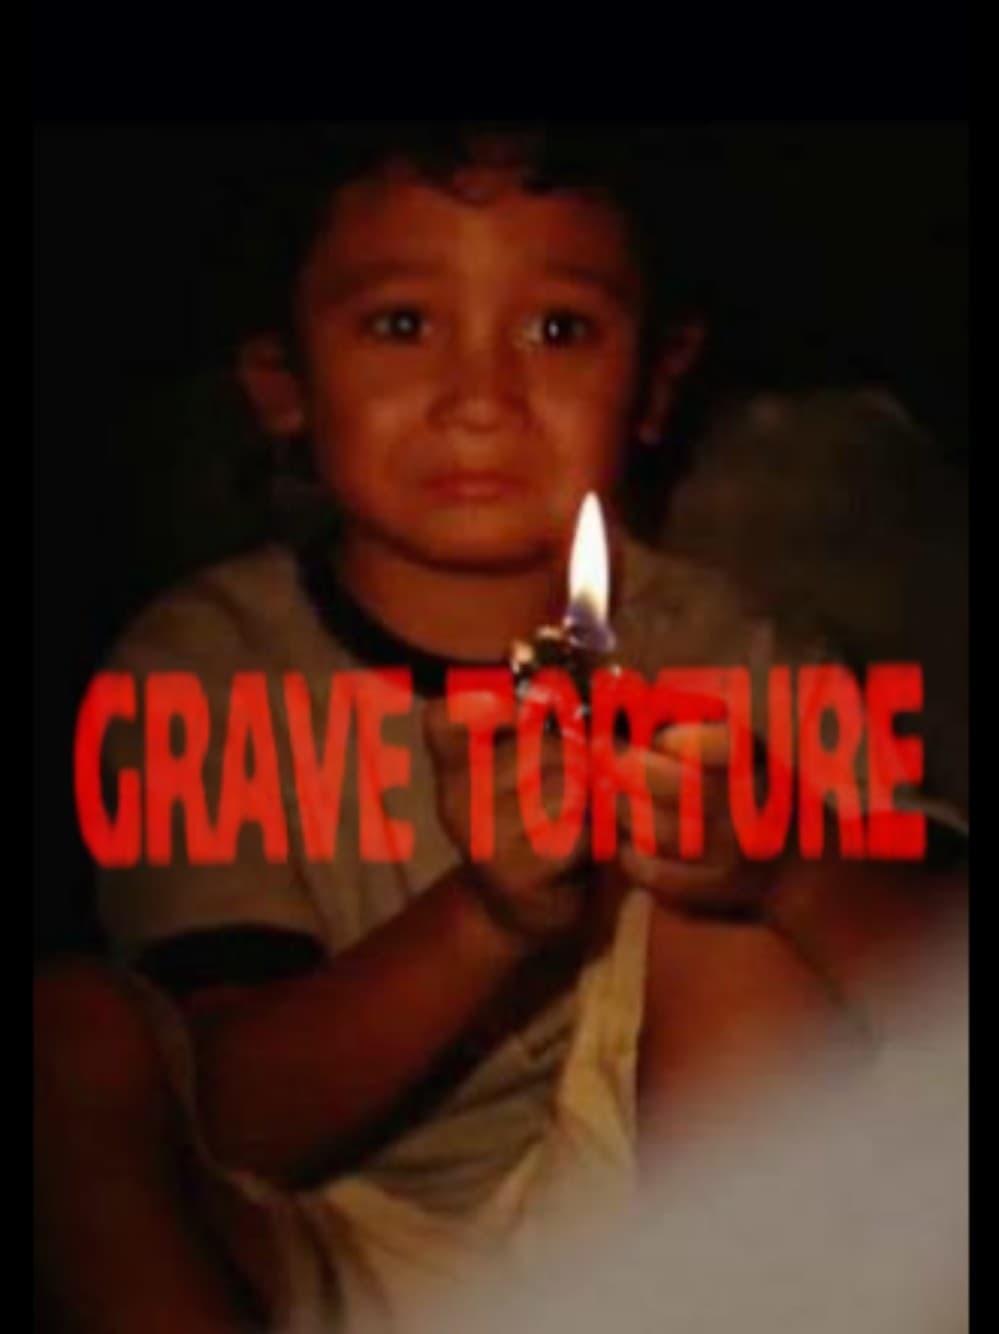 Grave Torture poster